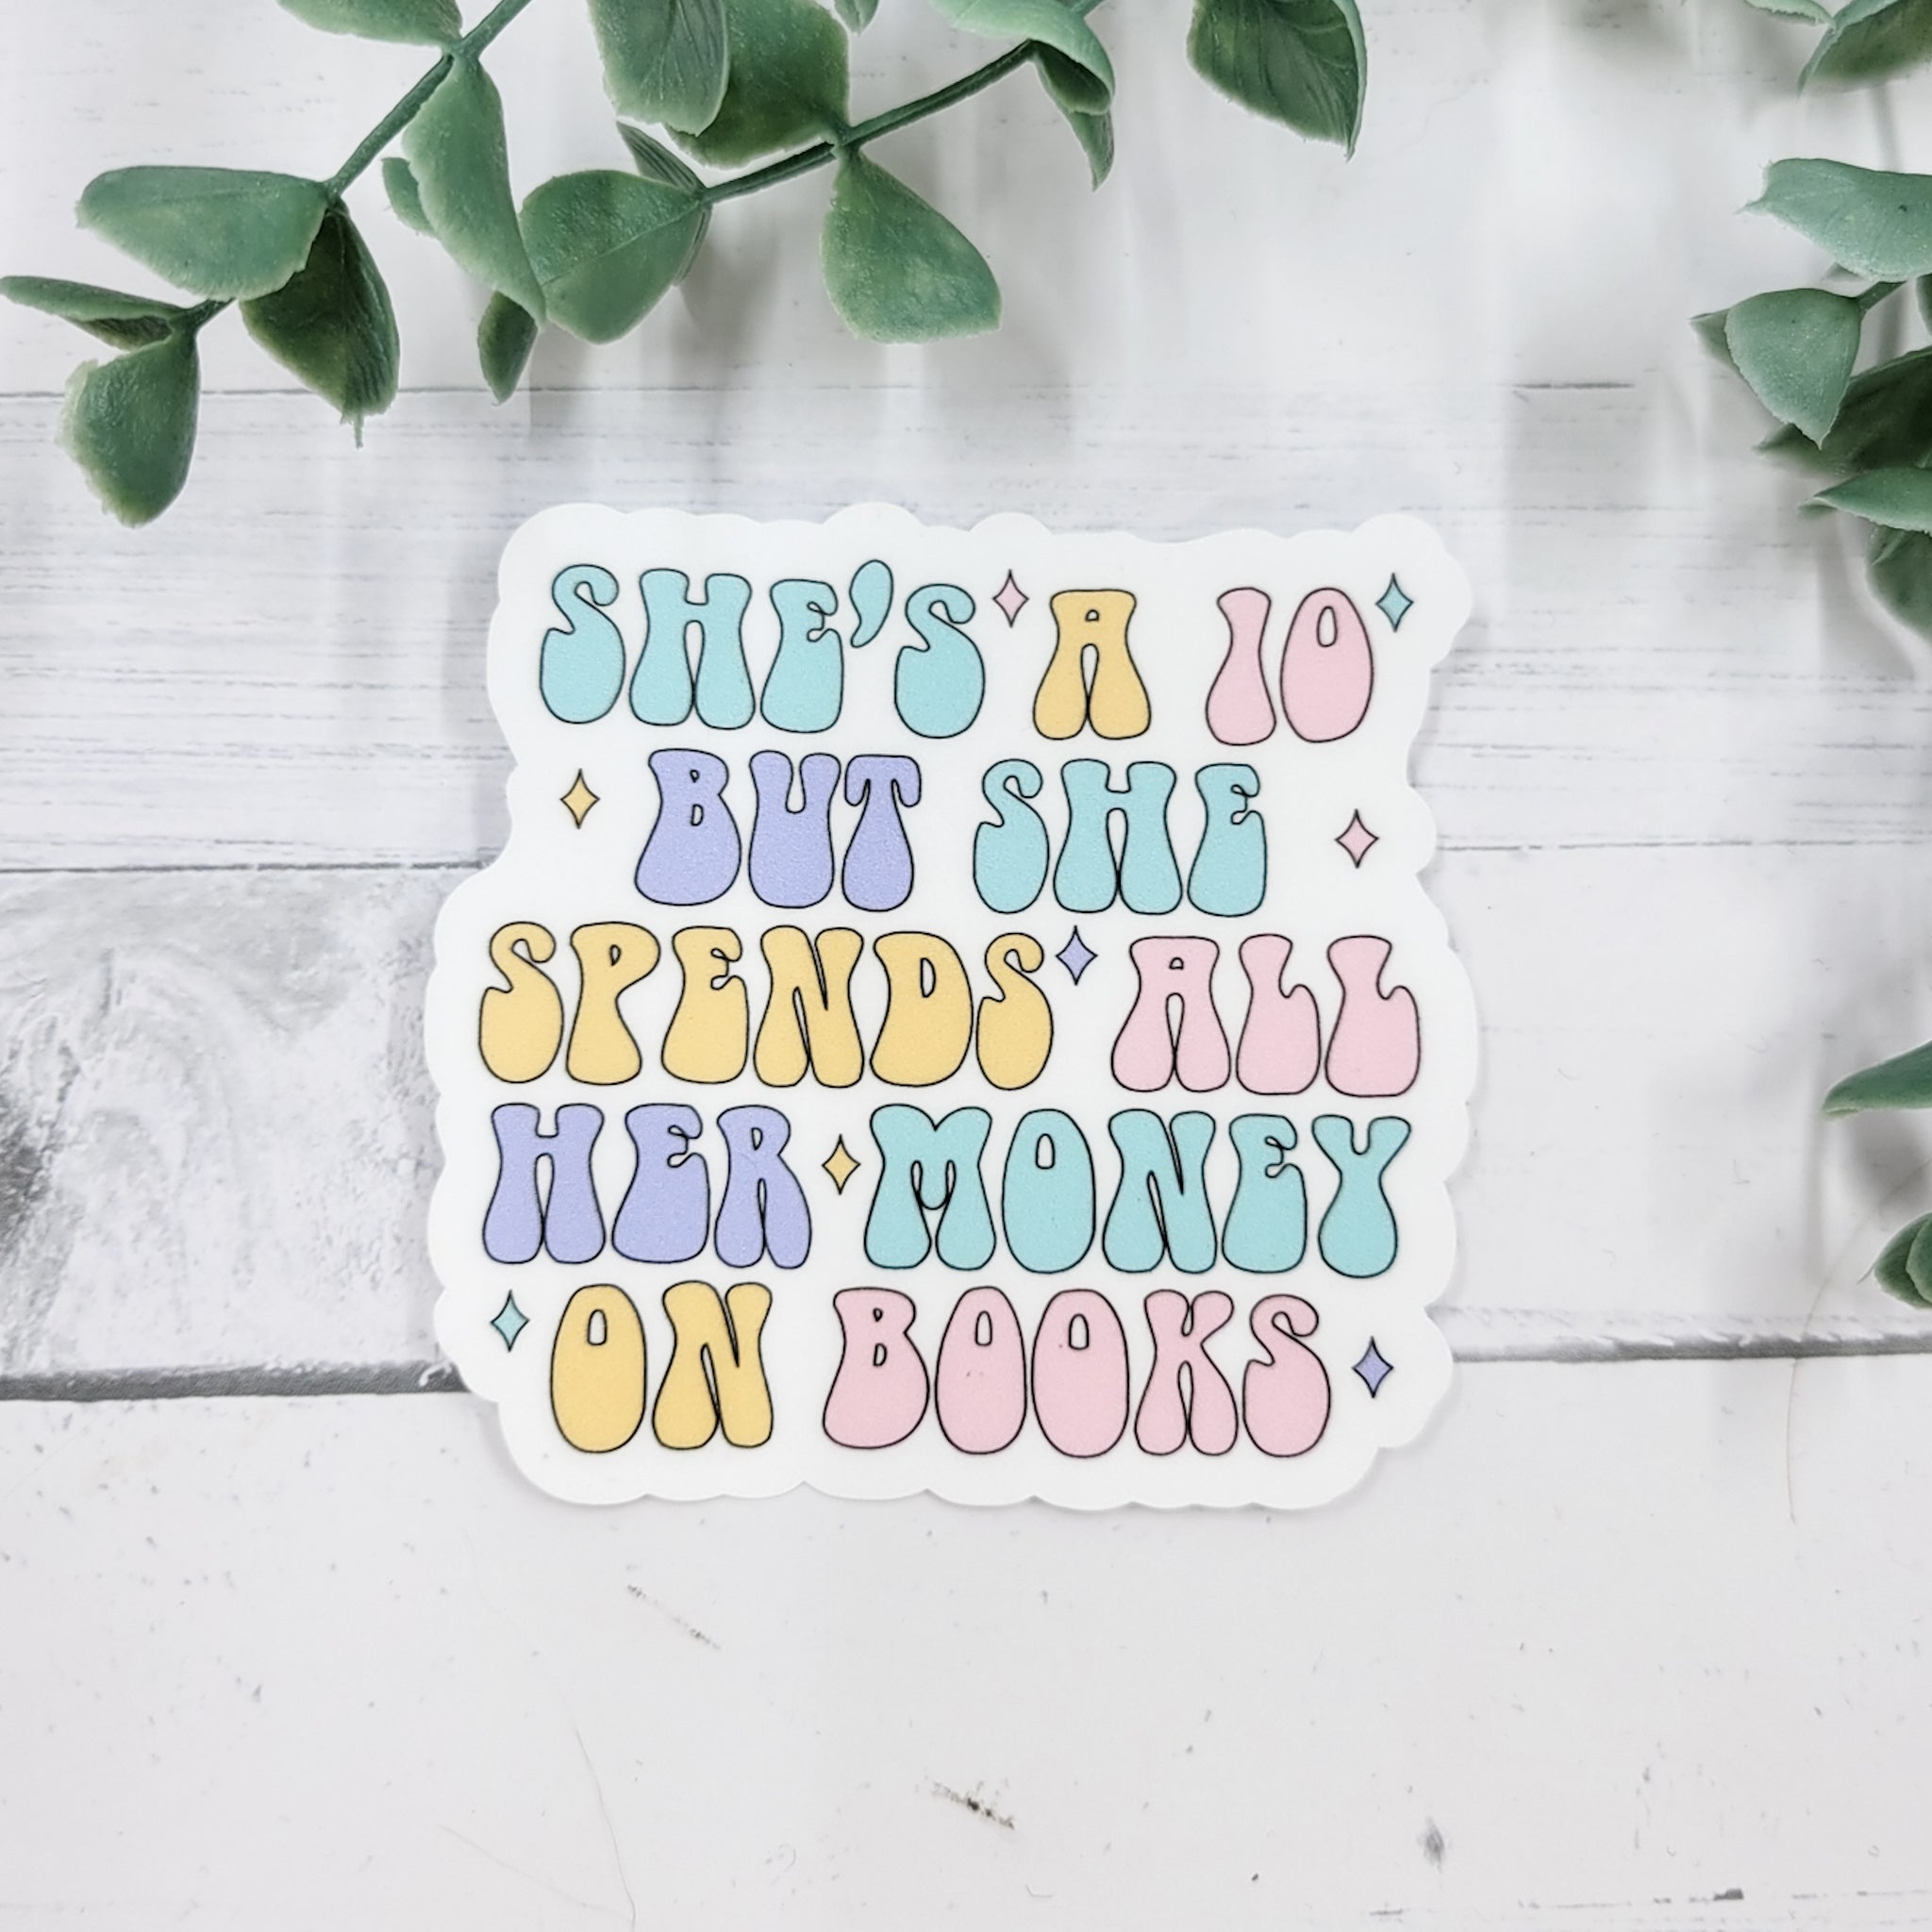 Spends All Her Money On Books - Vinyl Waterproof Sticker